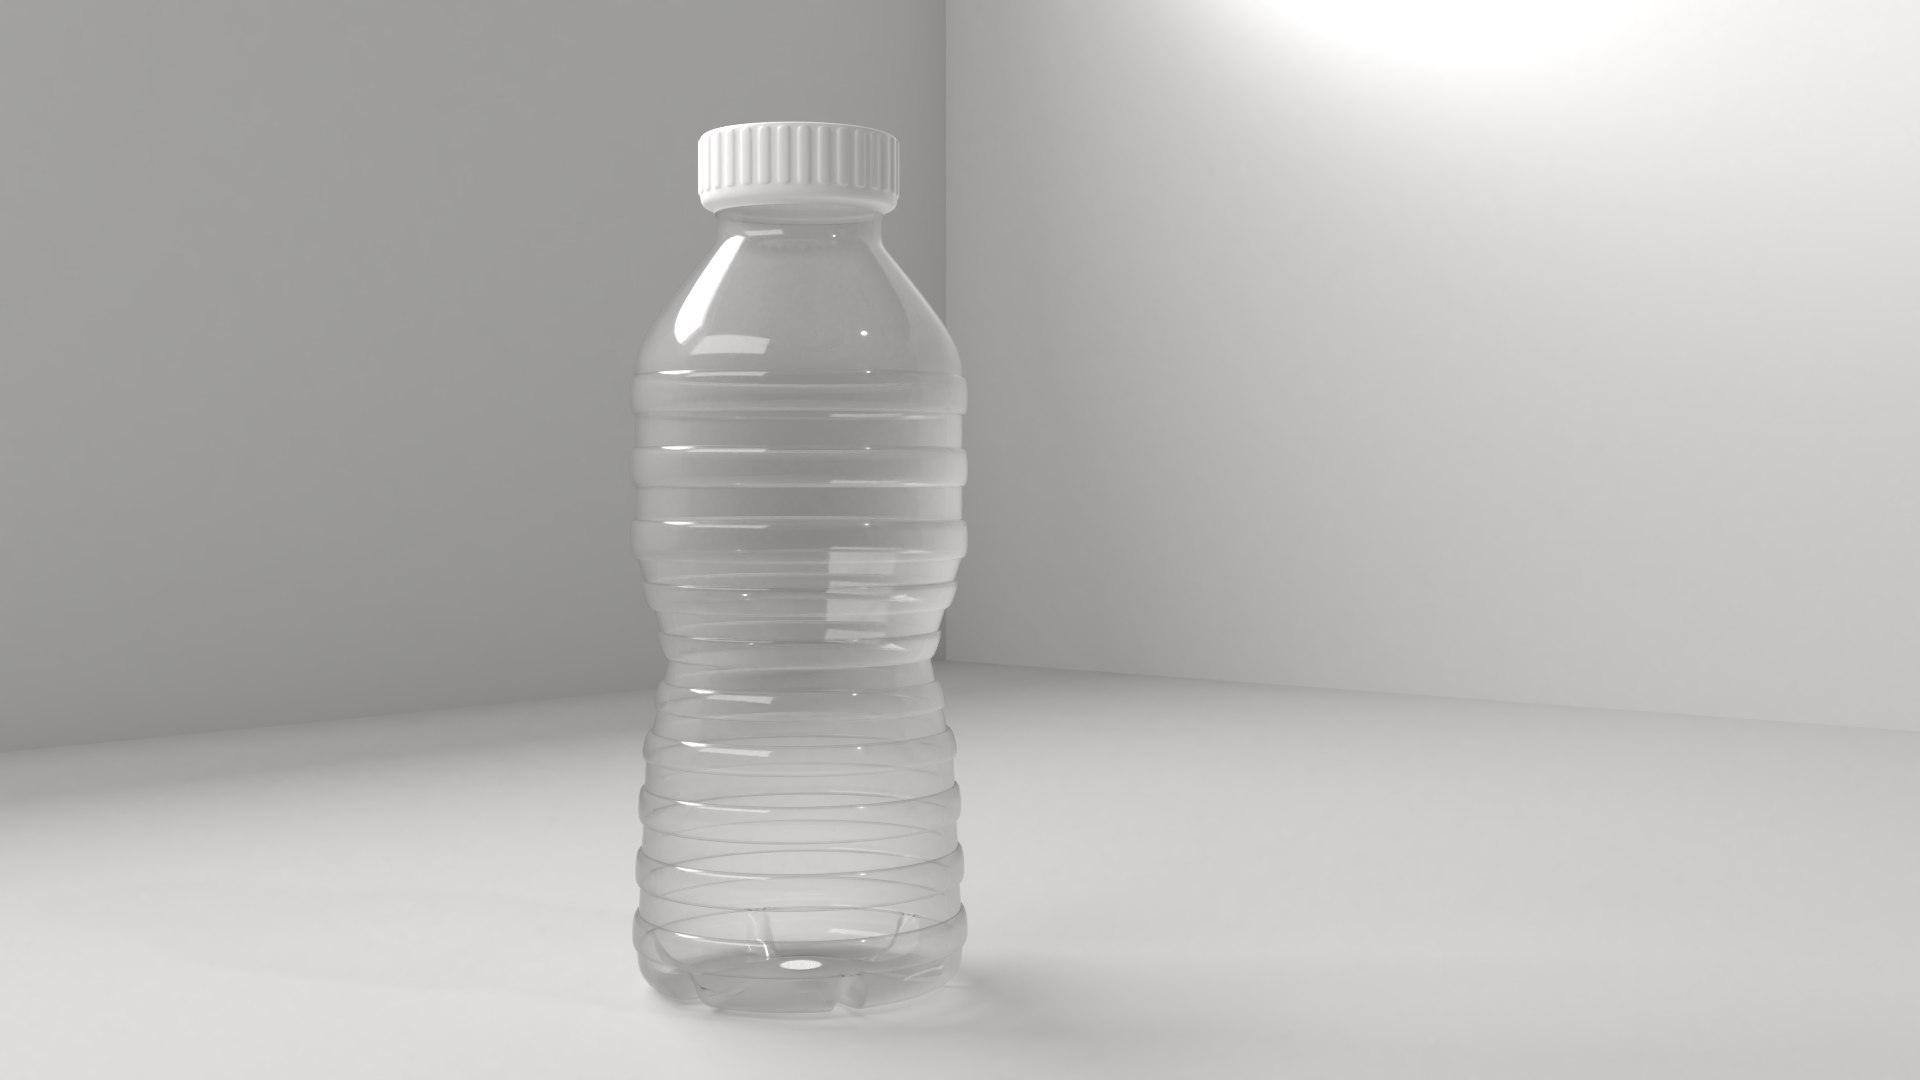 Plastic bottle 6 3D model - TurboSquid 1433815